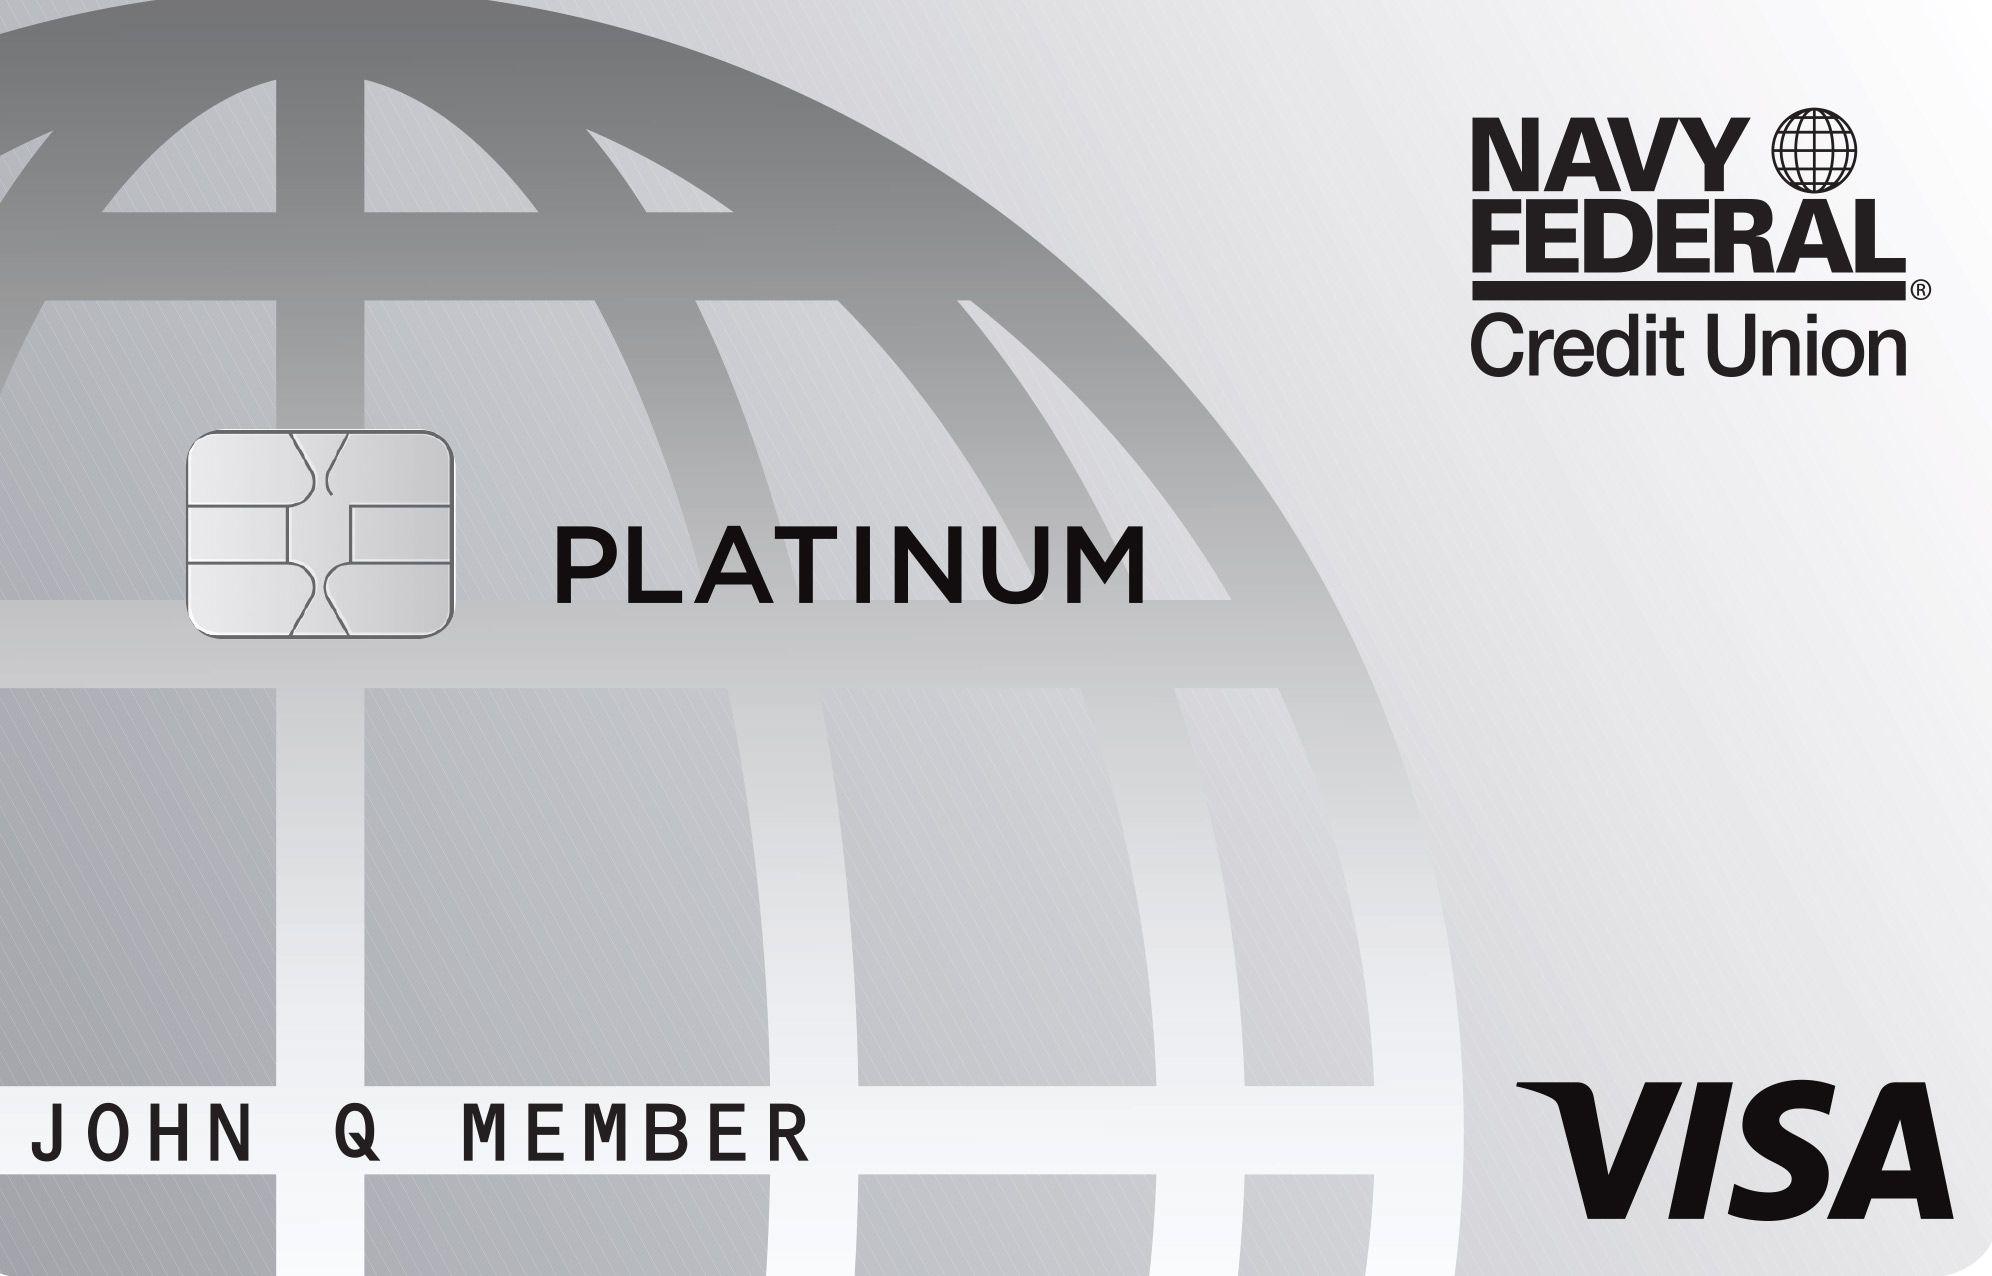 Nfcu Logo - Platinum Credit Card or Visa. Navy Federal Credit Union